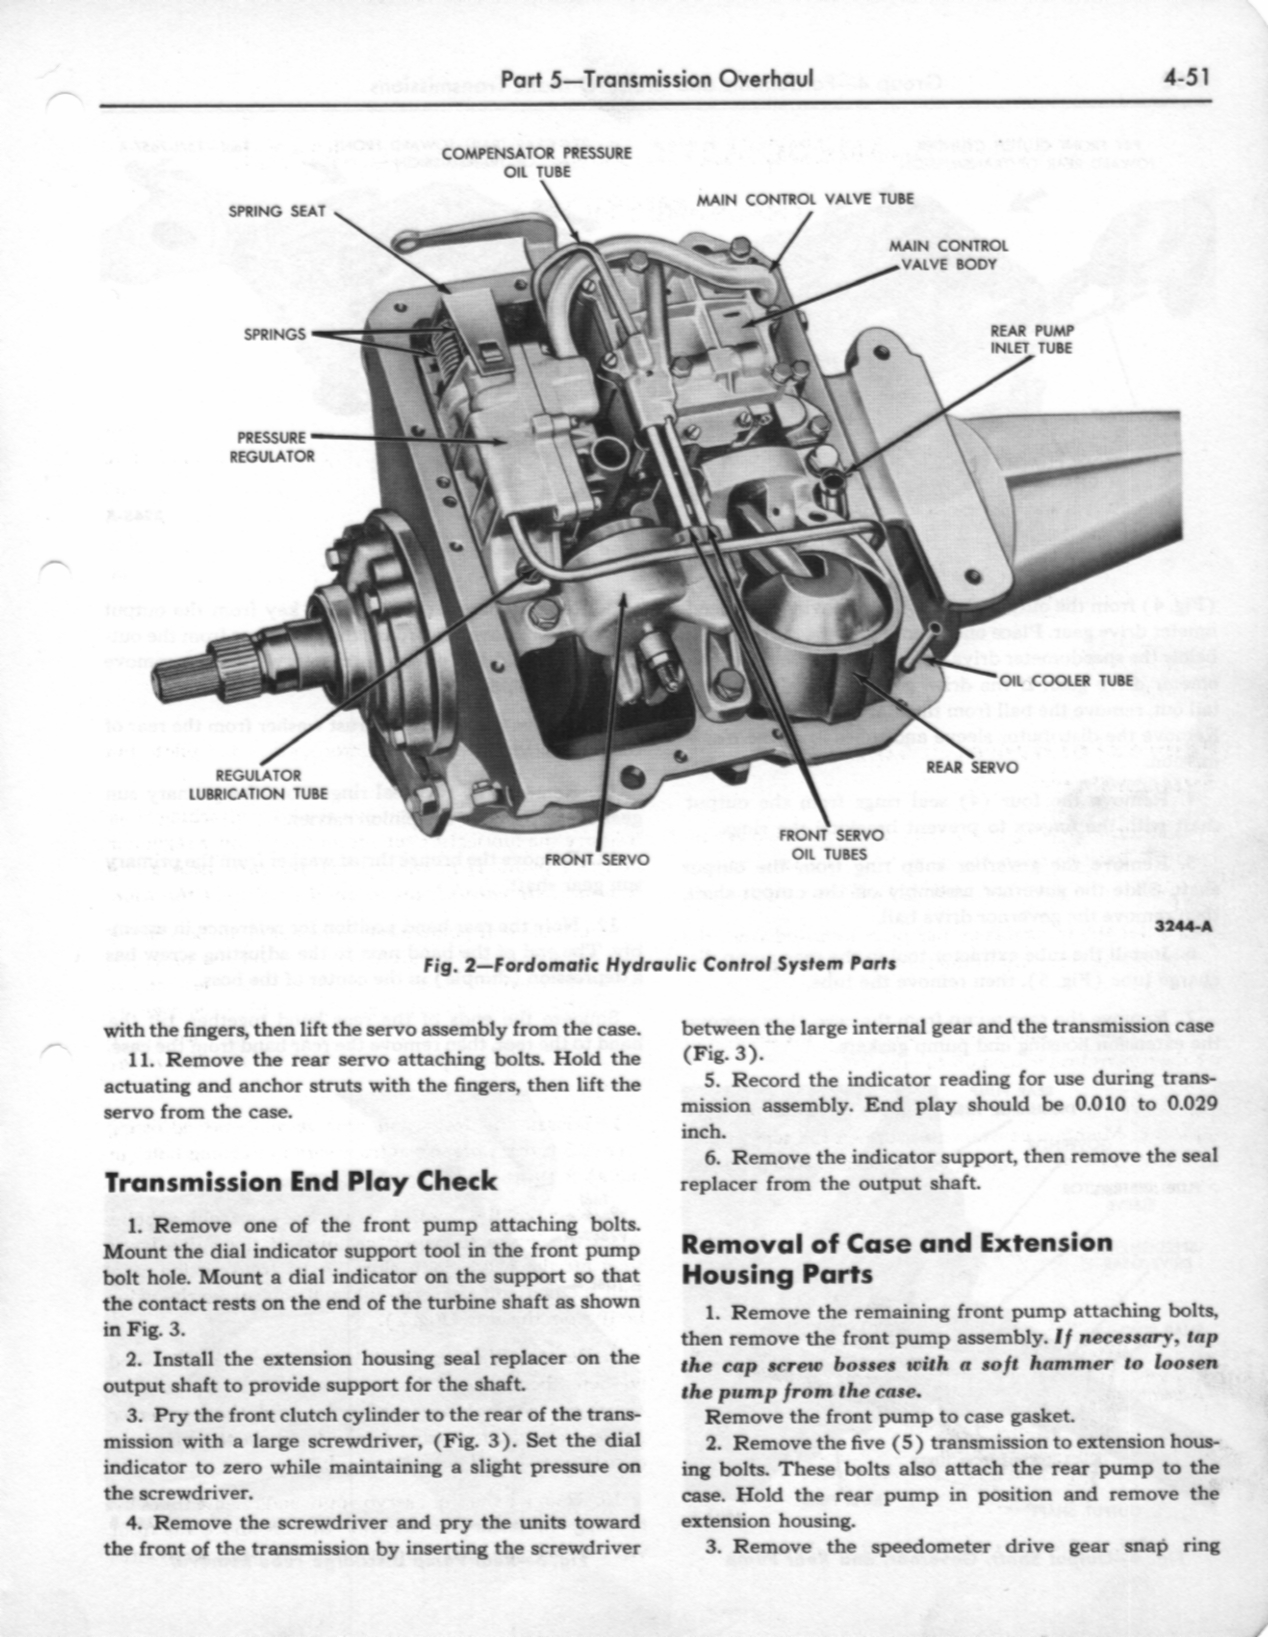 1958 Ford cruise-o-matic transmission #2